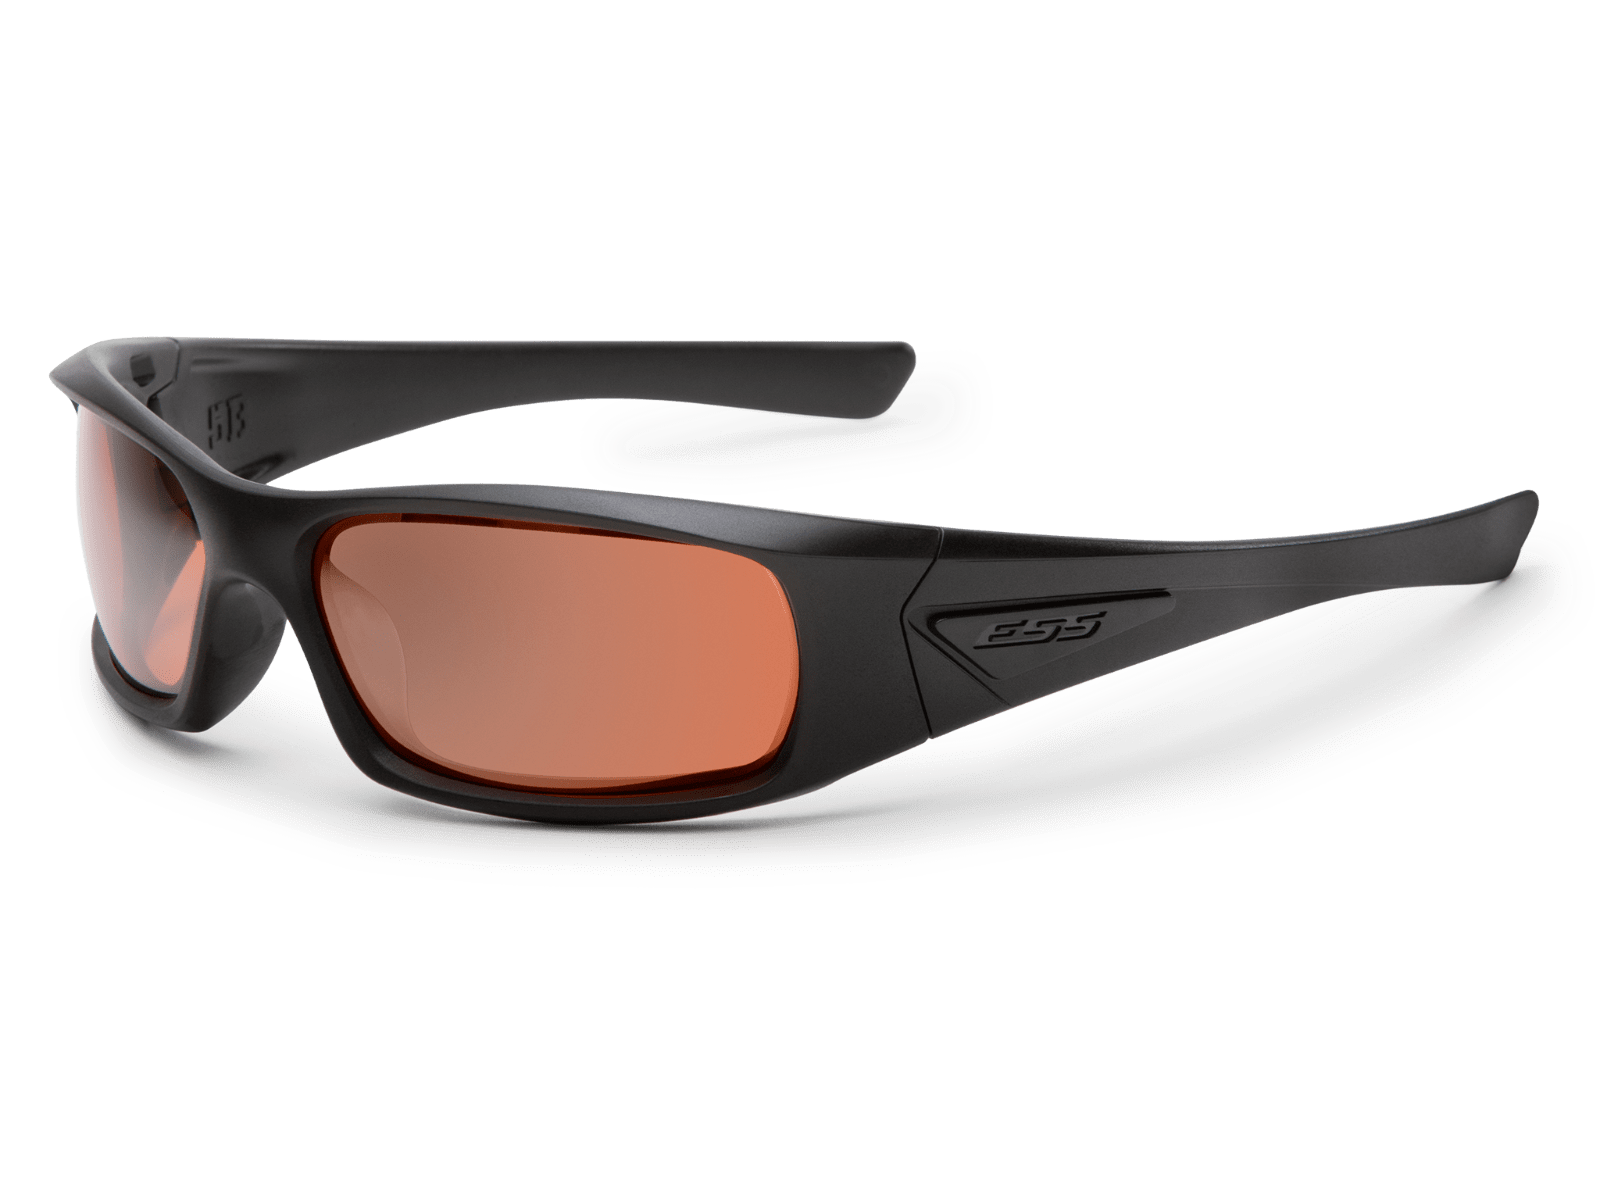 ESS 5B Ballistic Sunglasses Black Frame Copper Lenses EE9006-02ESS 5B Ballistic Sunglasses Black Frame Copper Lenses EE9006-02